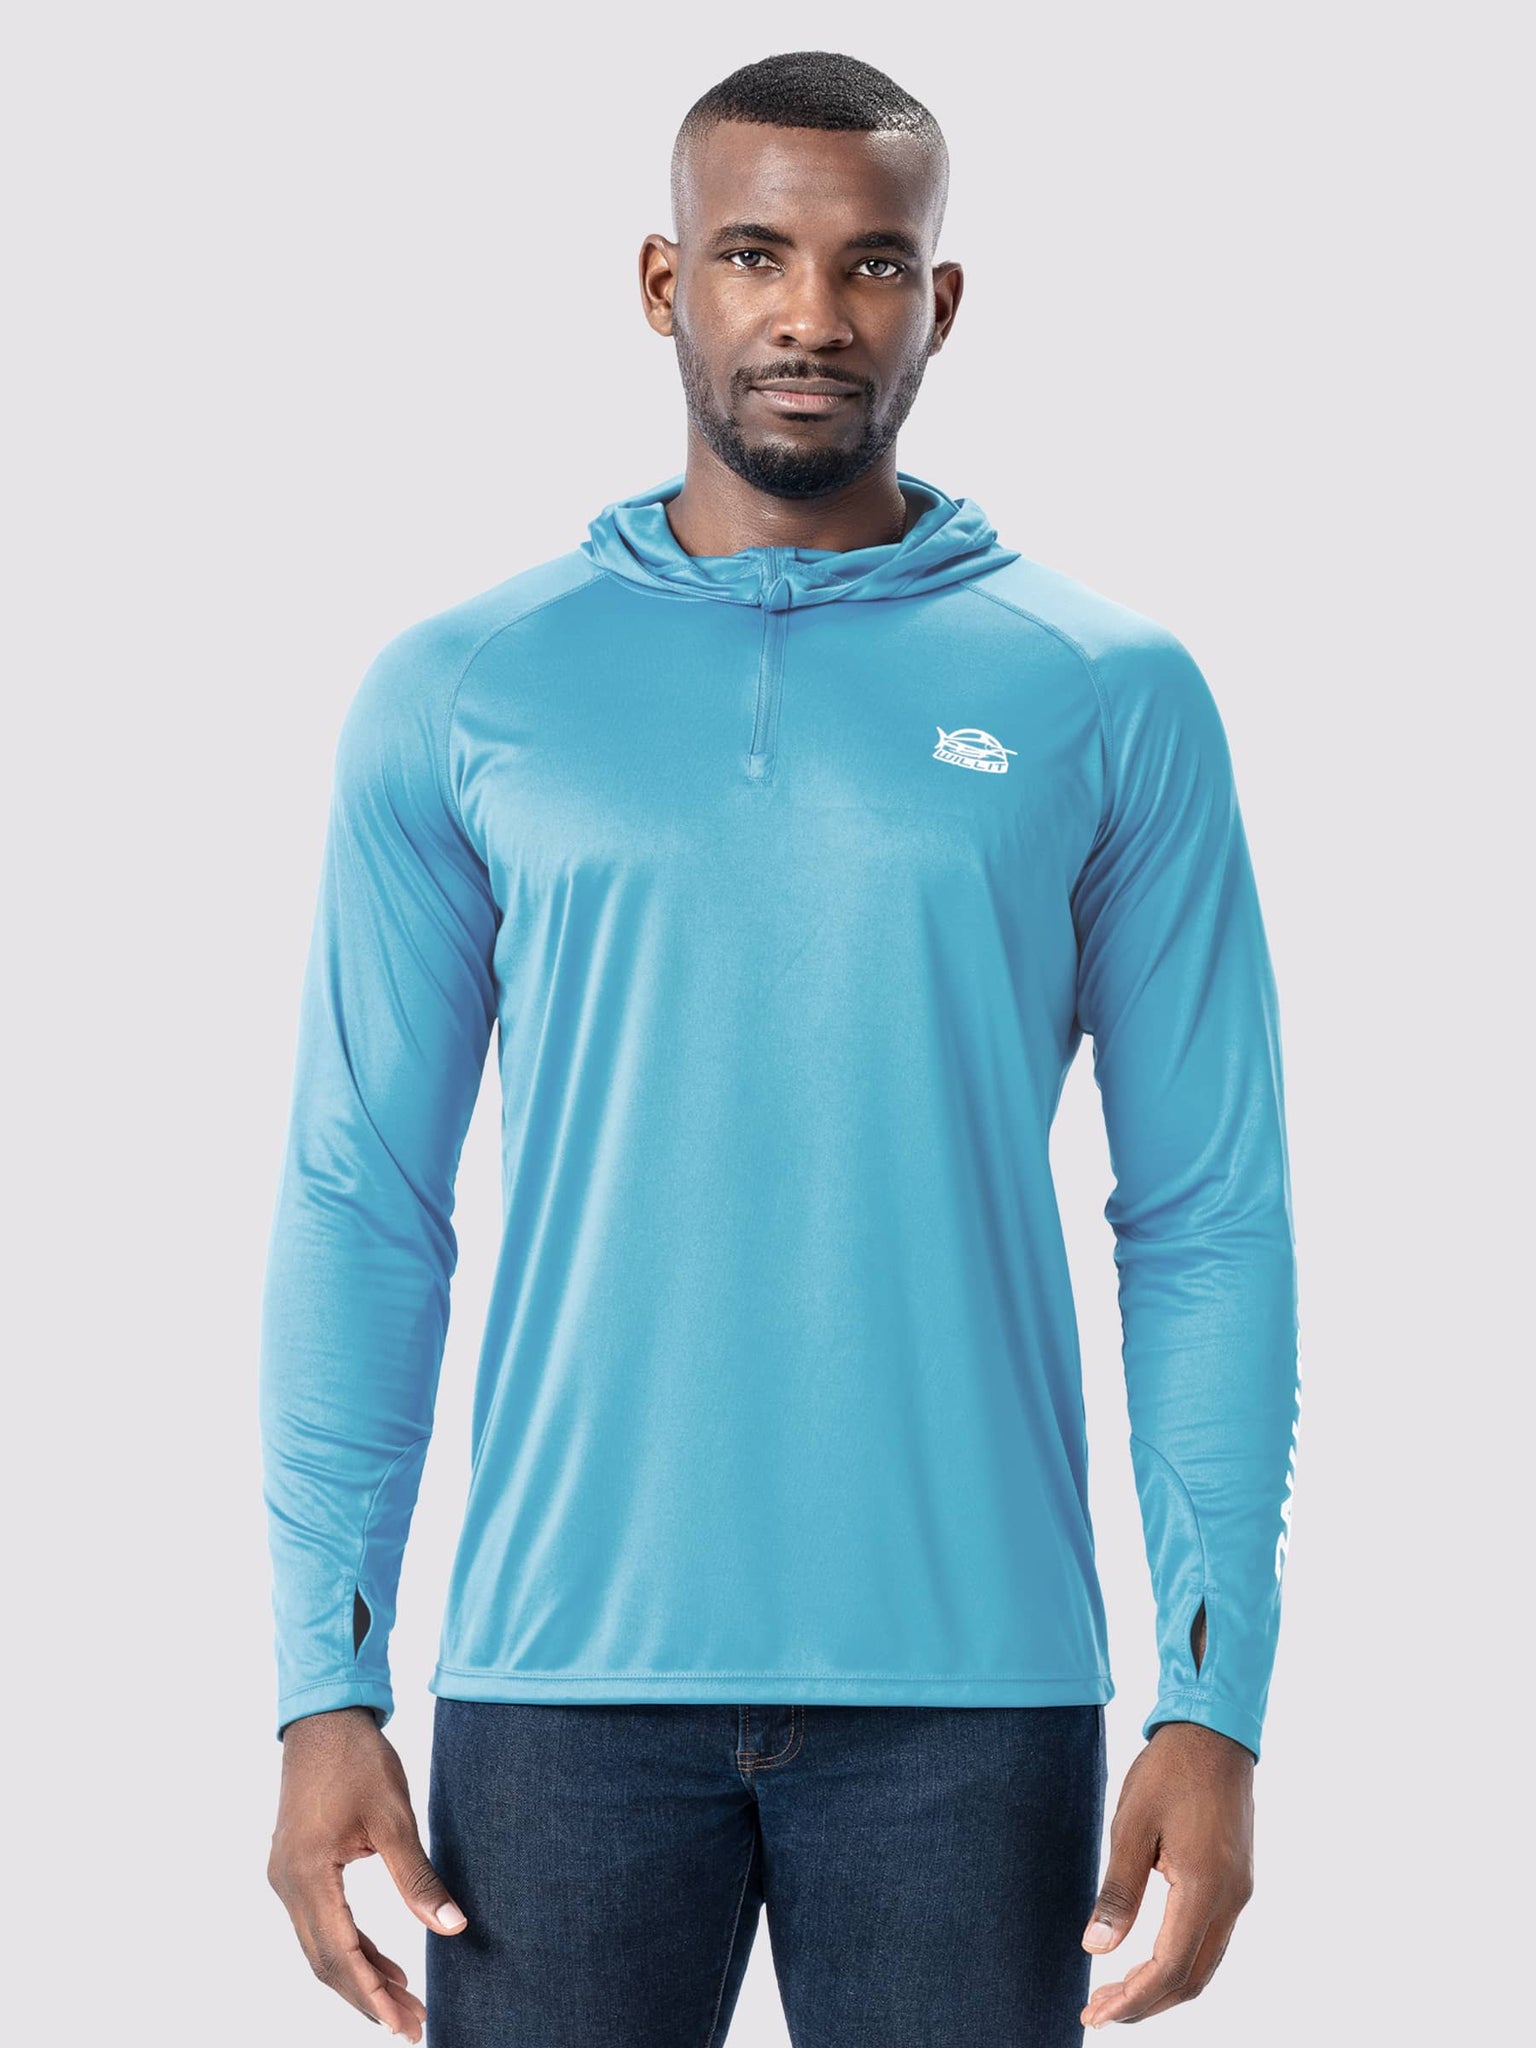 Willit Men's Quarter Zip Sun Shirts UPF 50+_Blue_model1